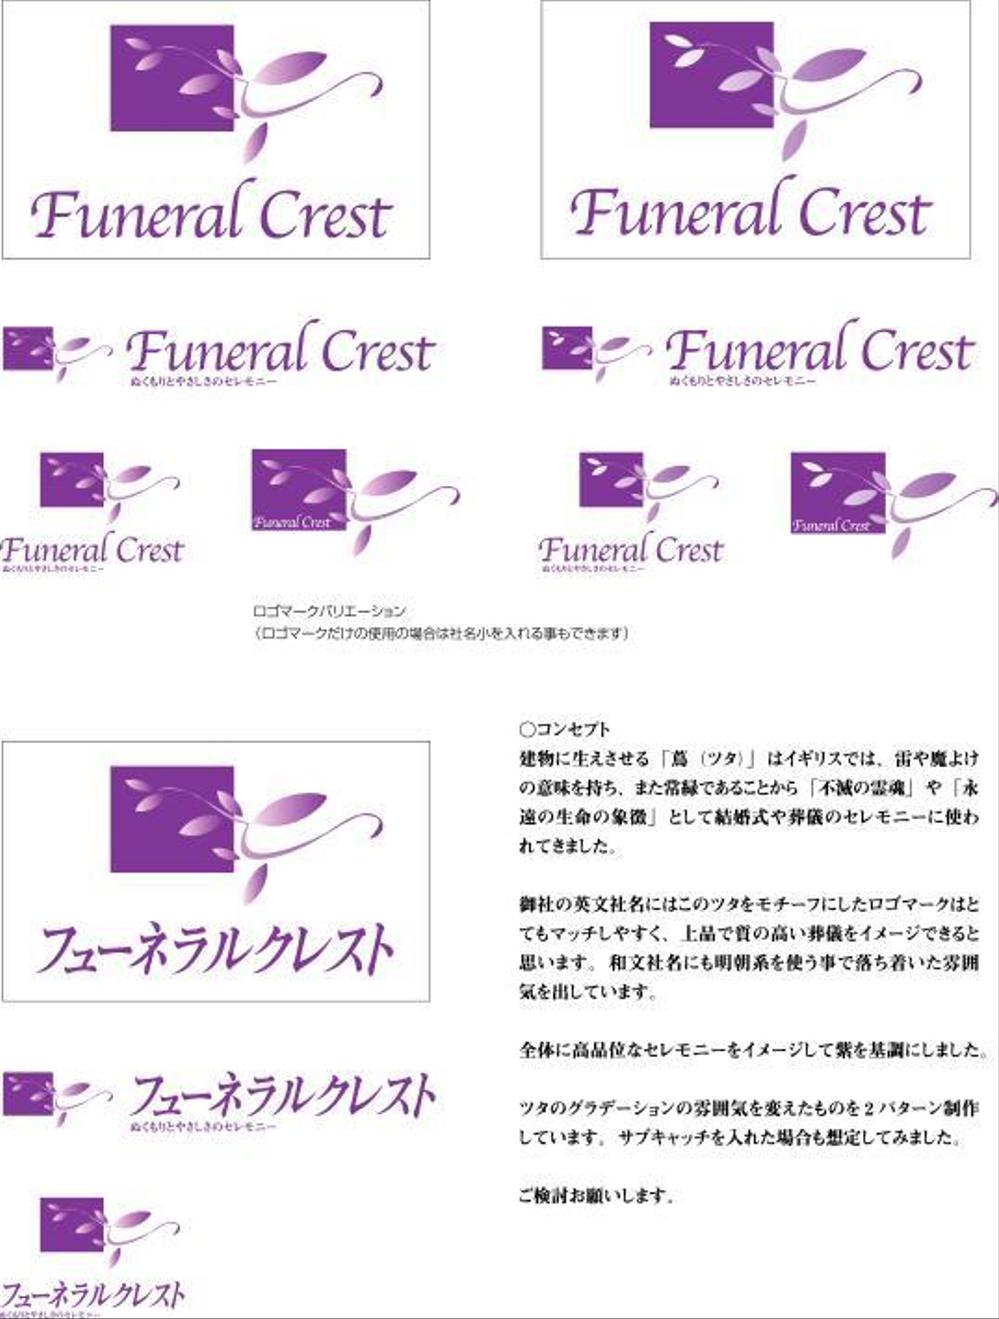 funeralcrest.jpg